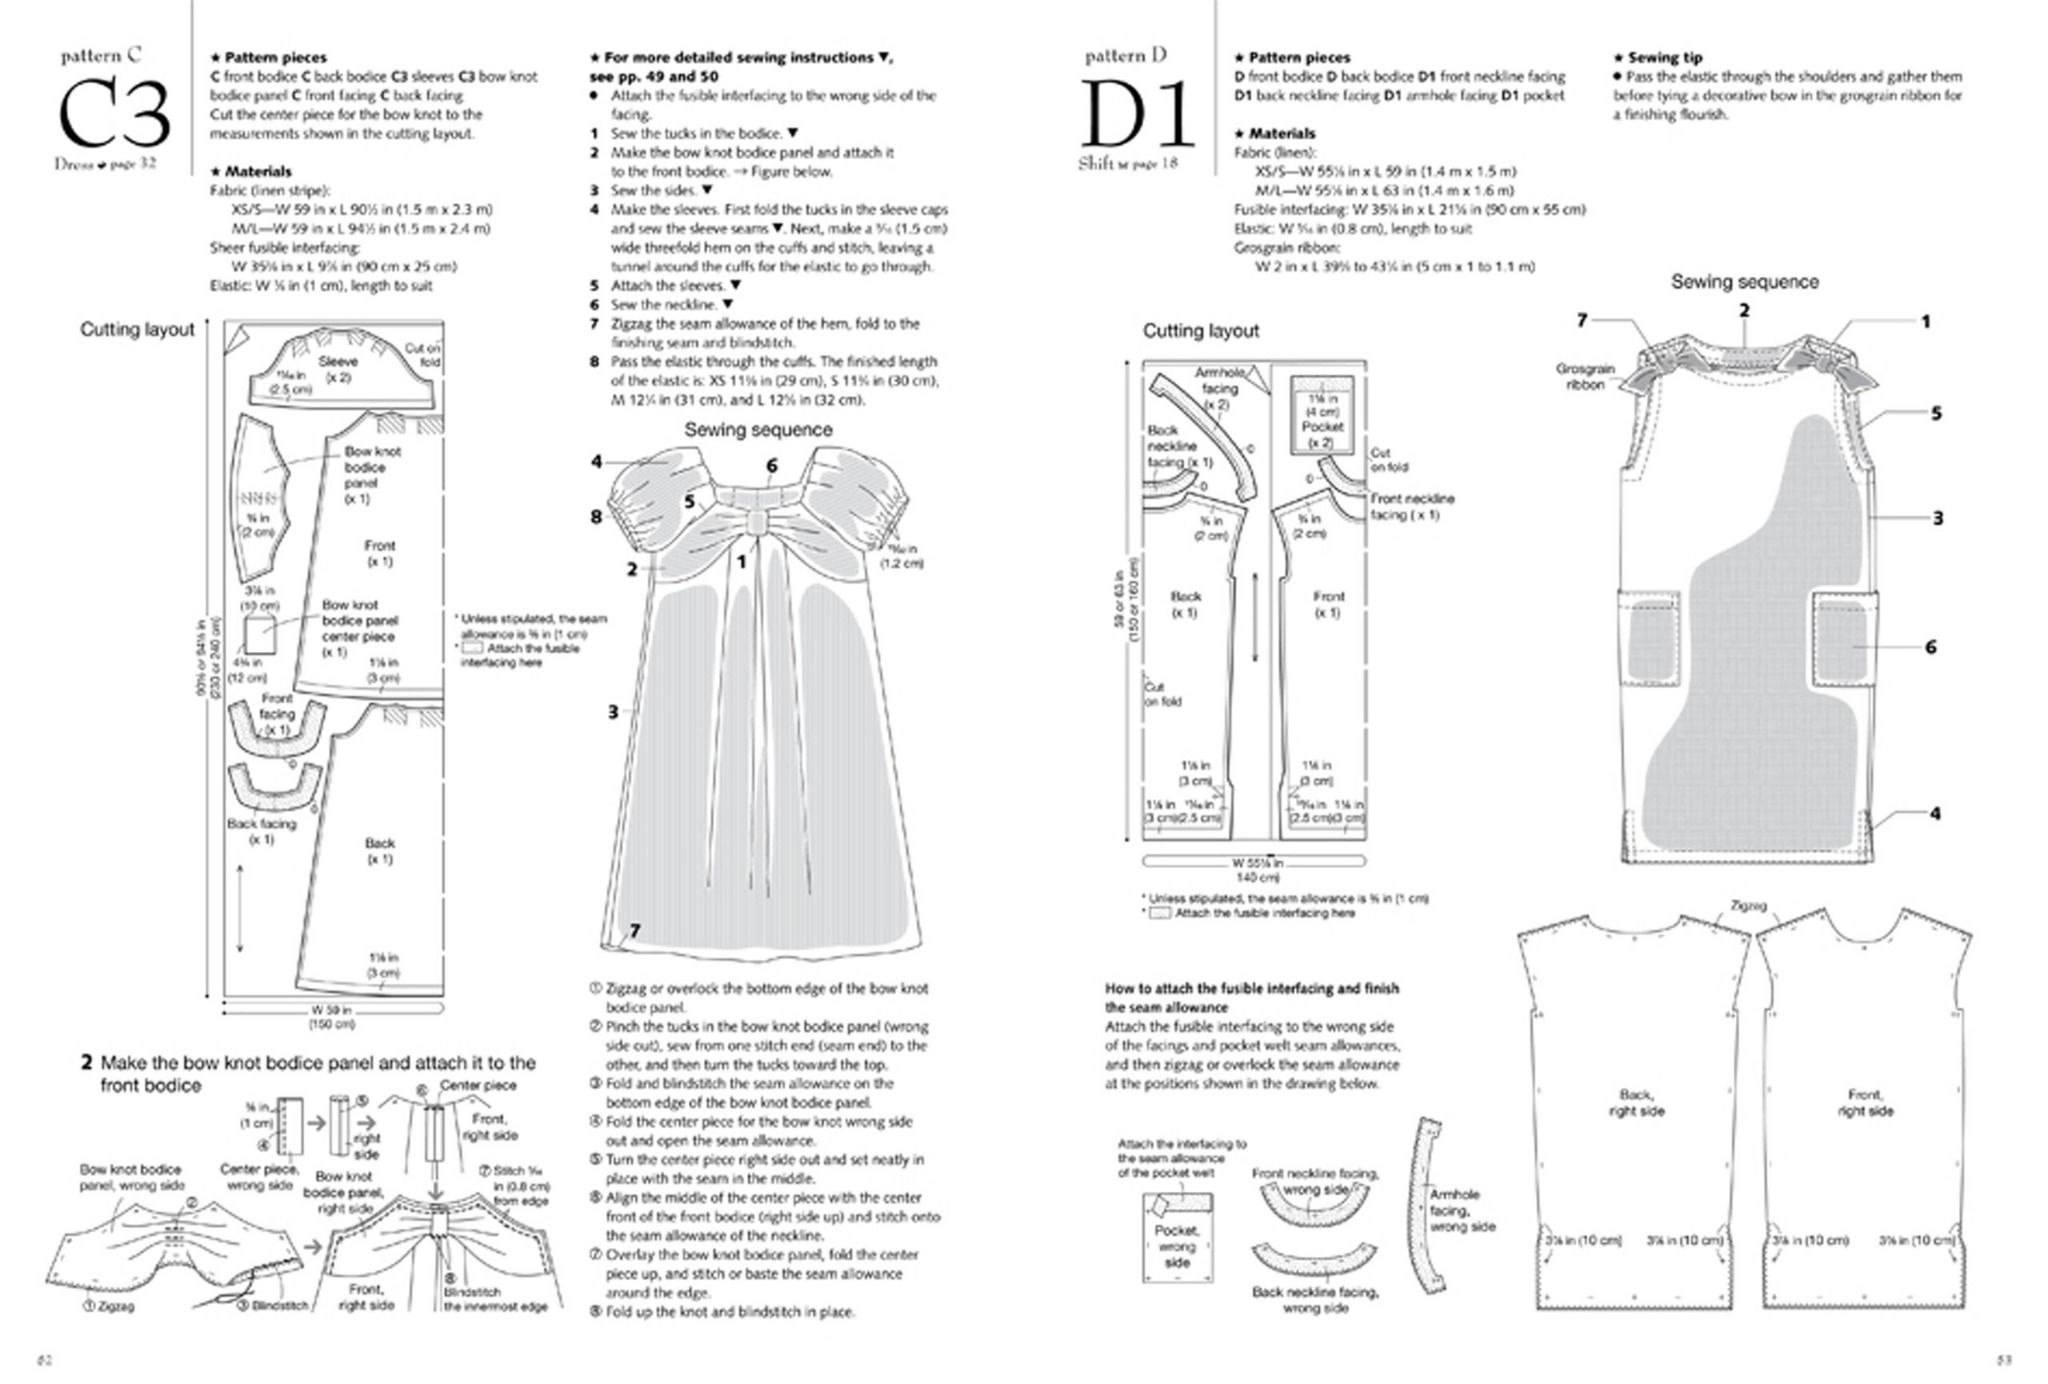  Feminine Wardrobe : Twenty-One Beautiful Skirts, Dresses and Tops for You to Make_Jinko Matsumoto_9781780671246_Laurence King Publishing 